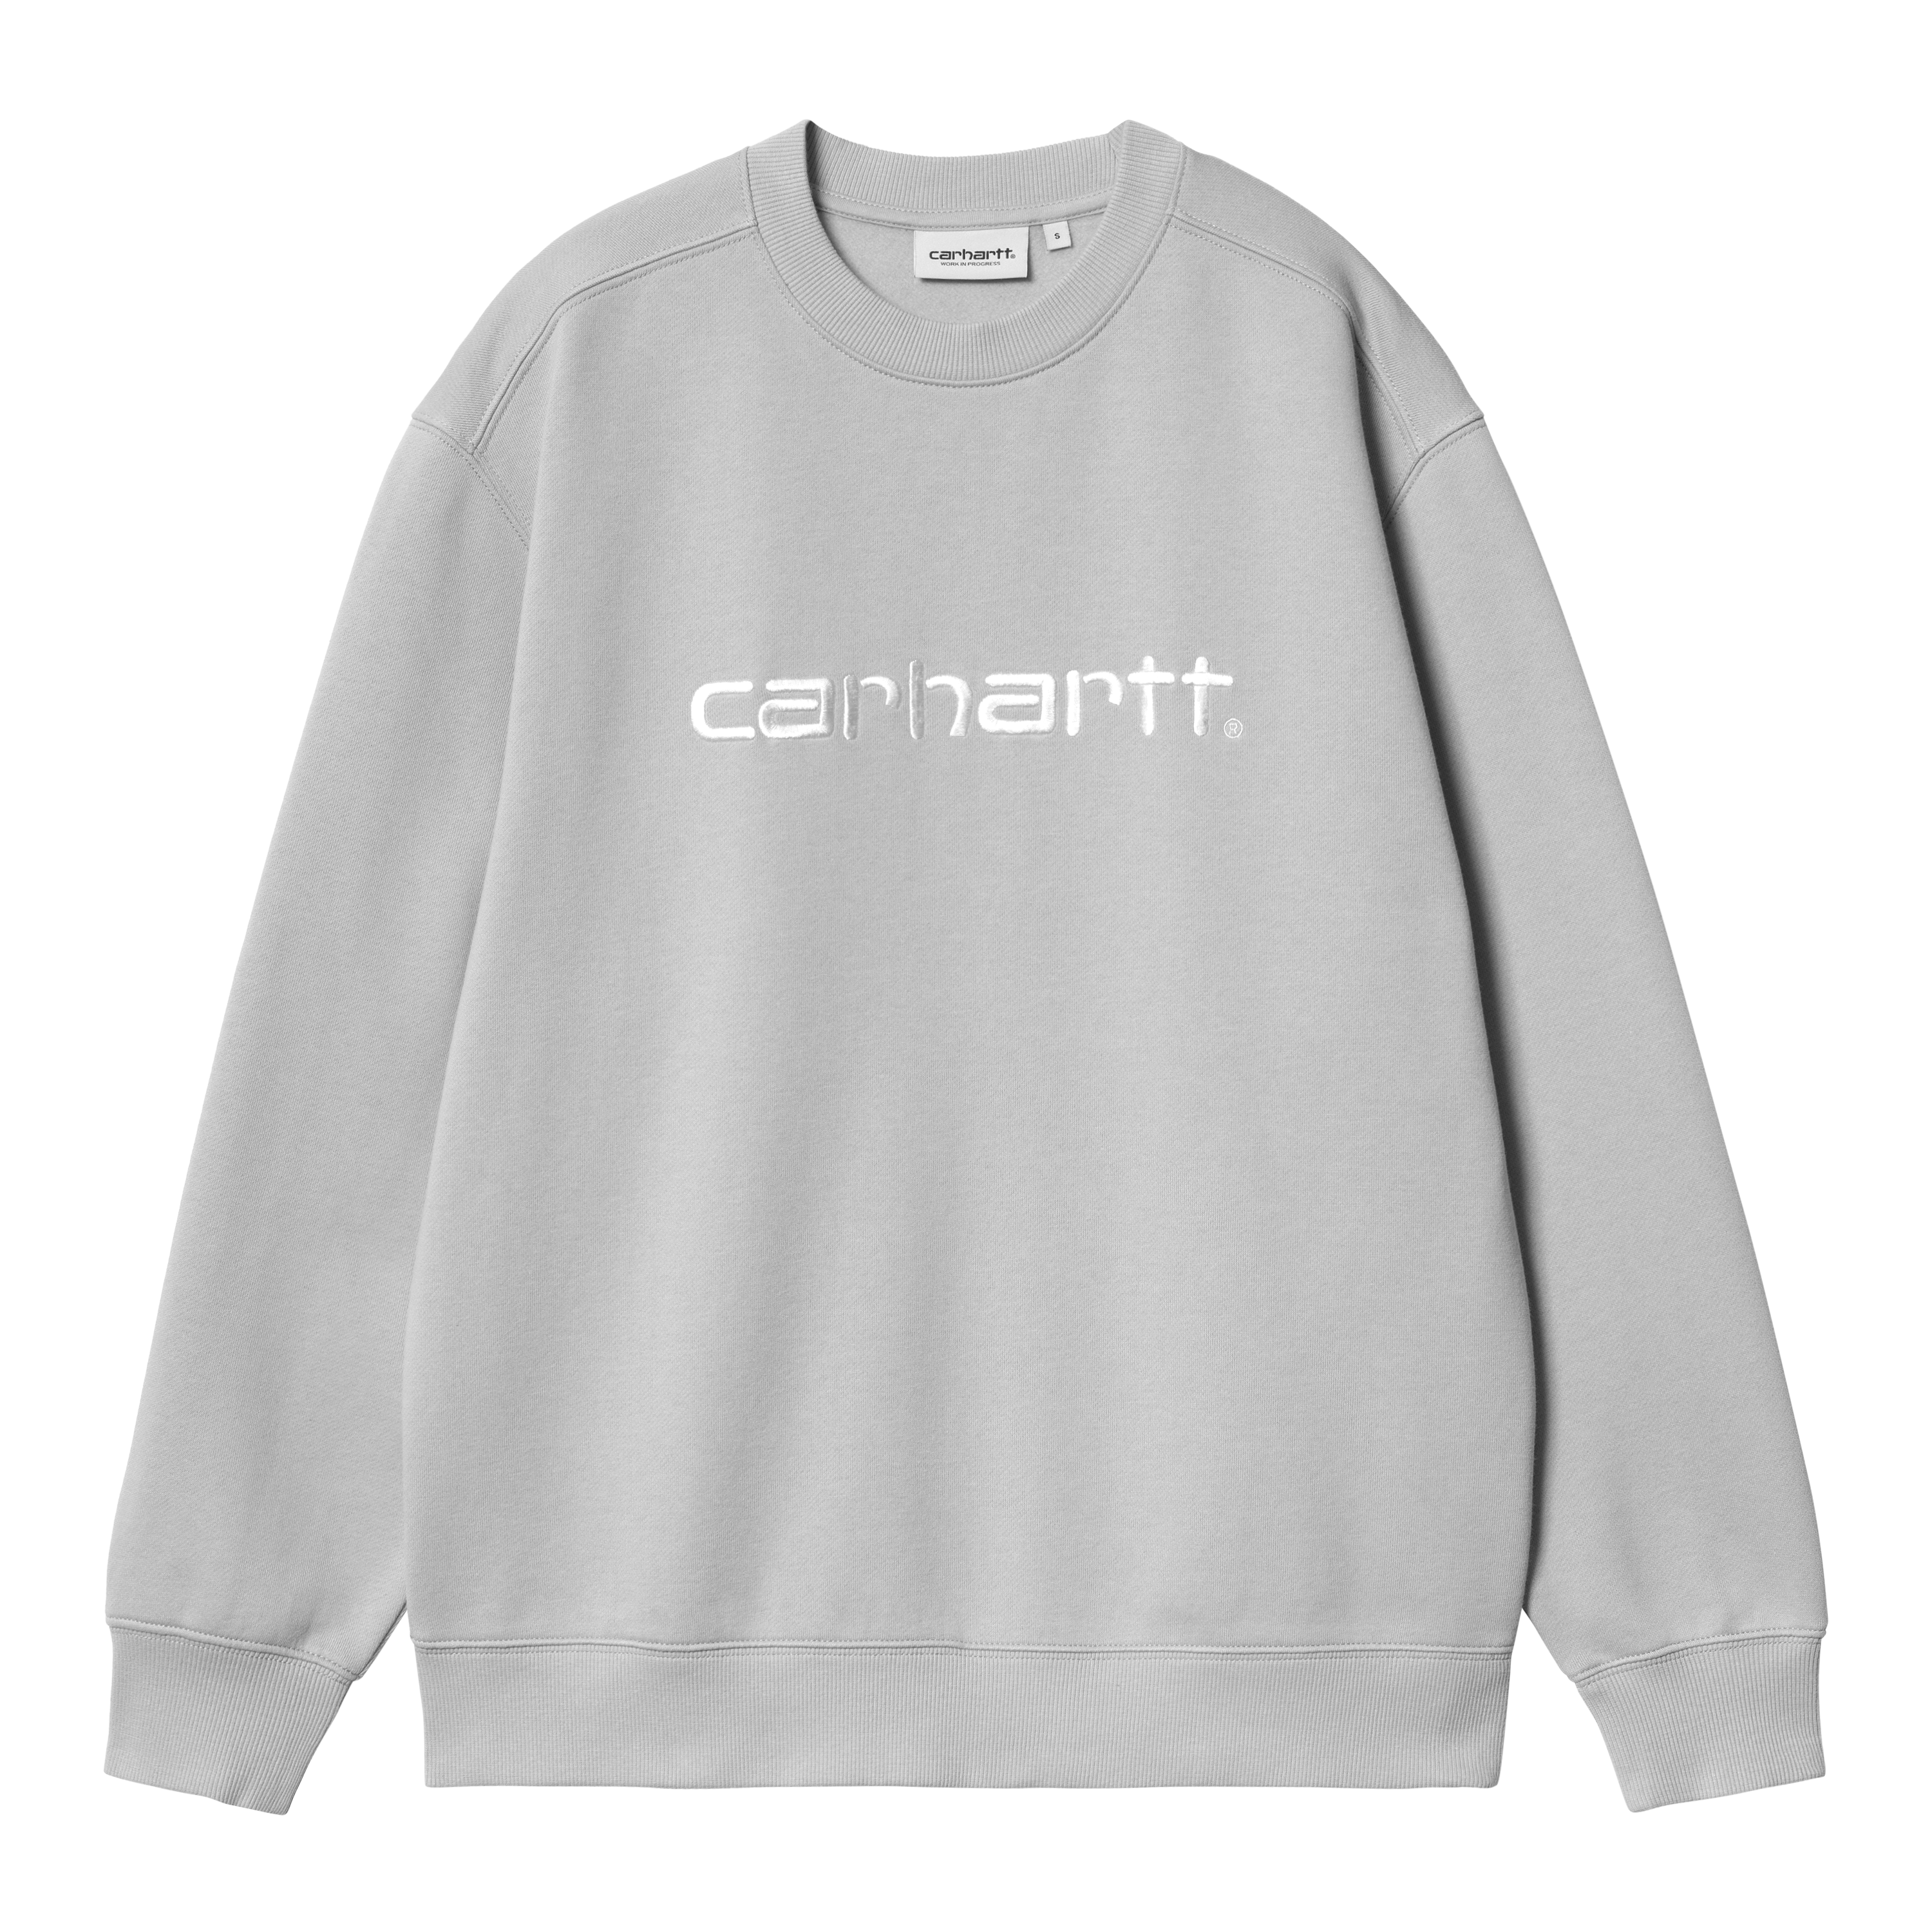 Carhartt WIP Women’s Carhartt Sweatshirt in